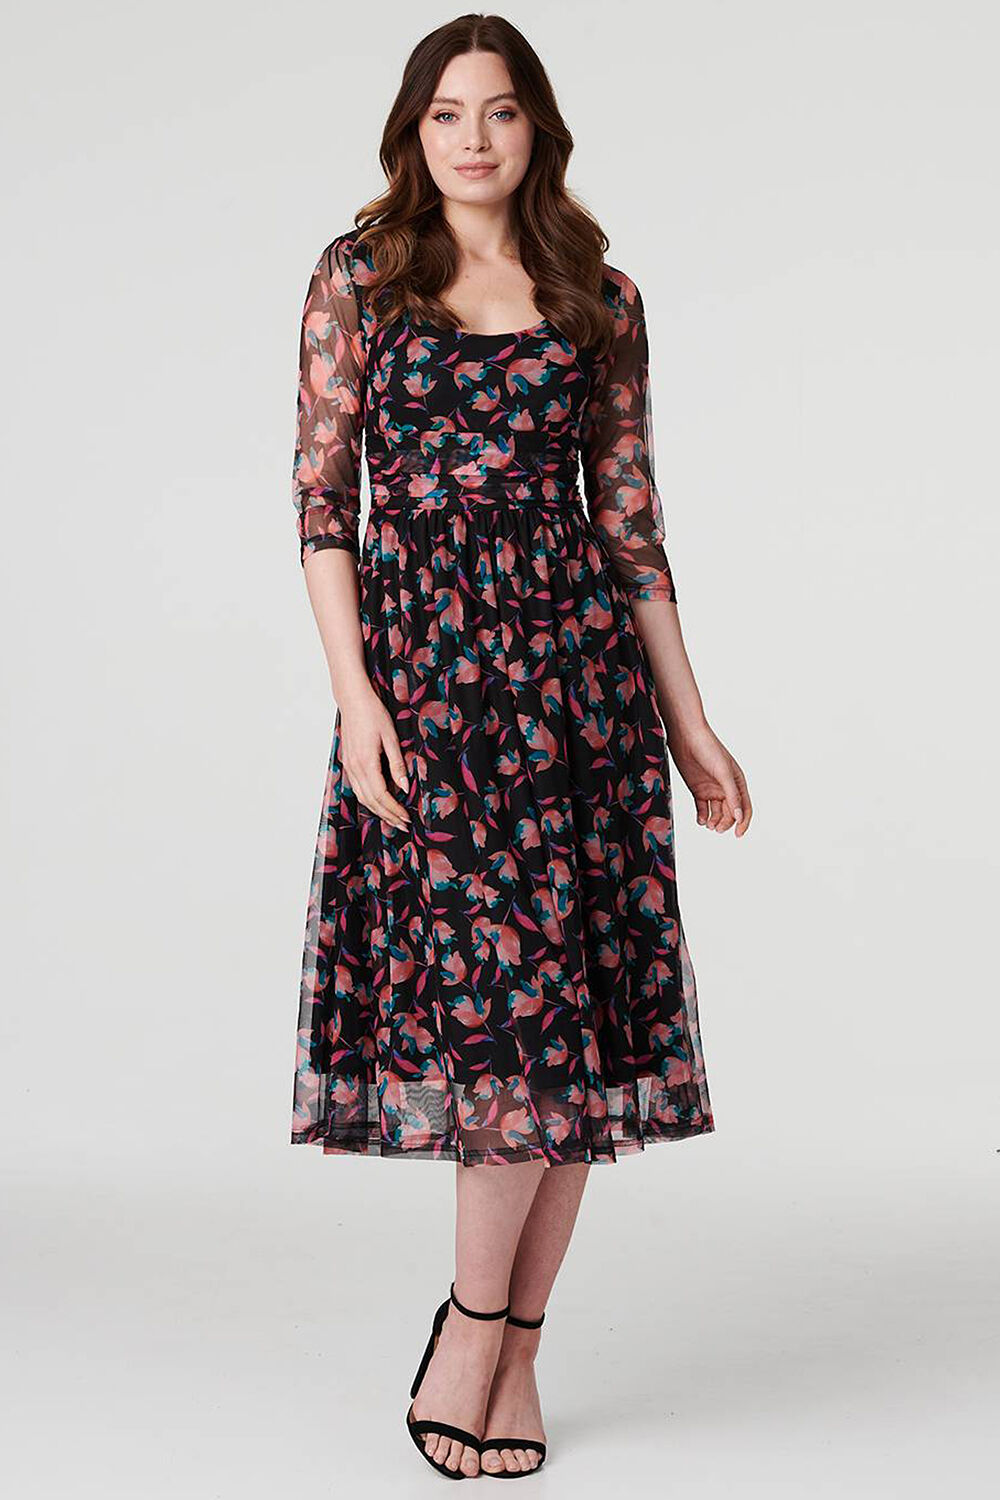 Izabel London Black - Floral Semi Sheer Ruched Midi Dress, Size: 16